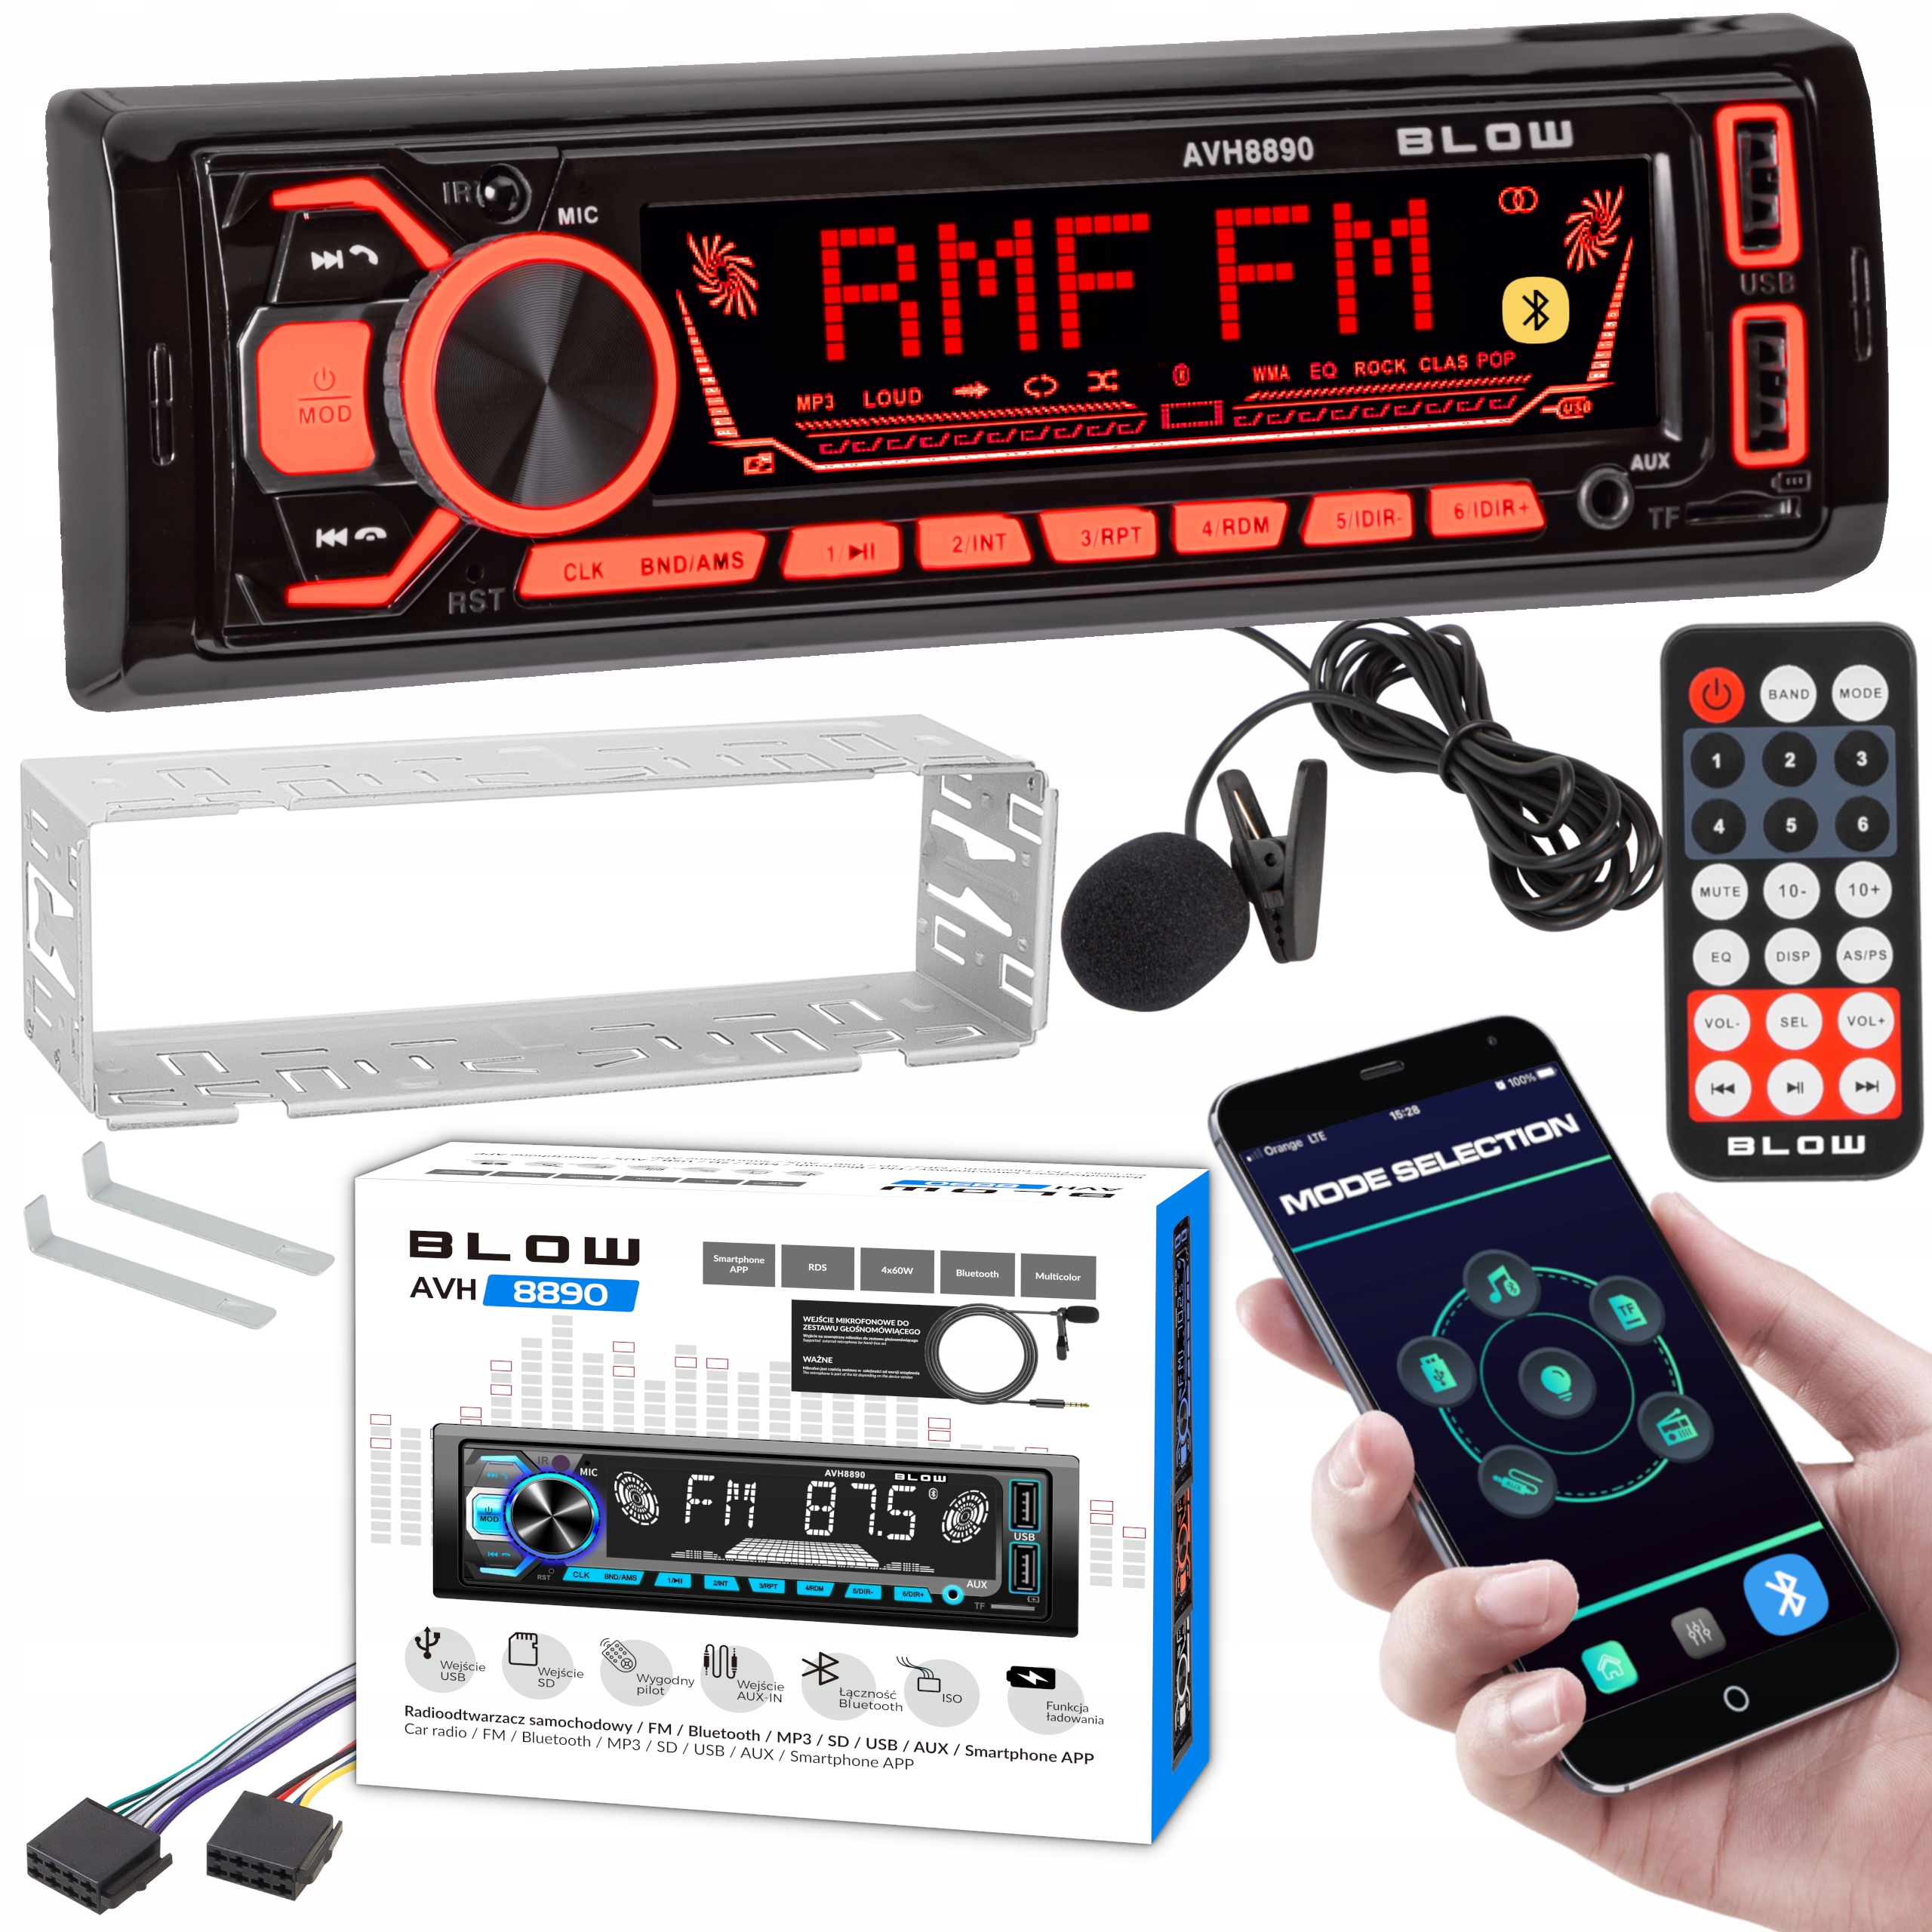  1-DIN Dietz Retro Radio DAB+, BT, MP3, USB, RDS